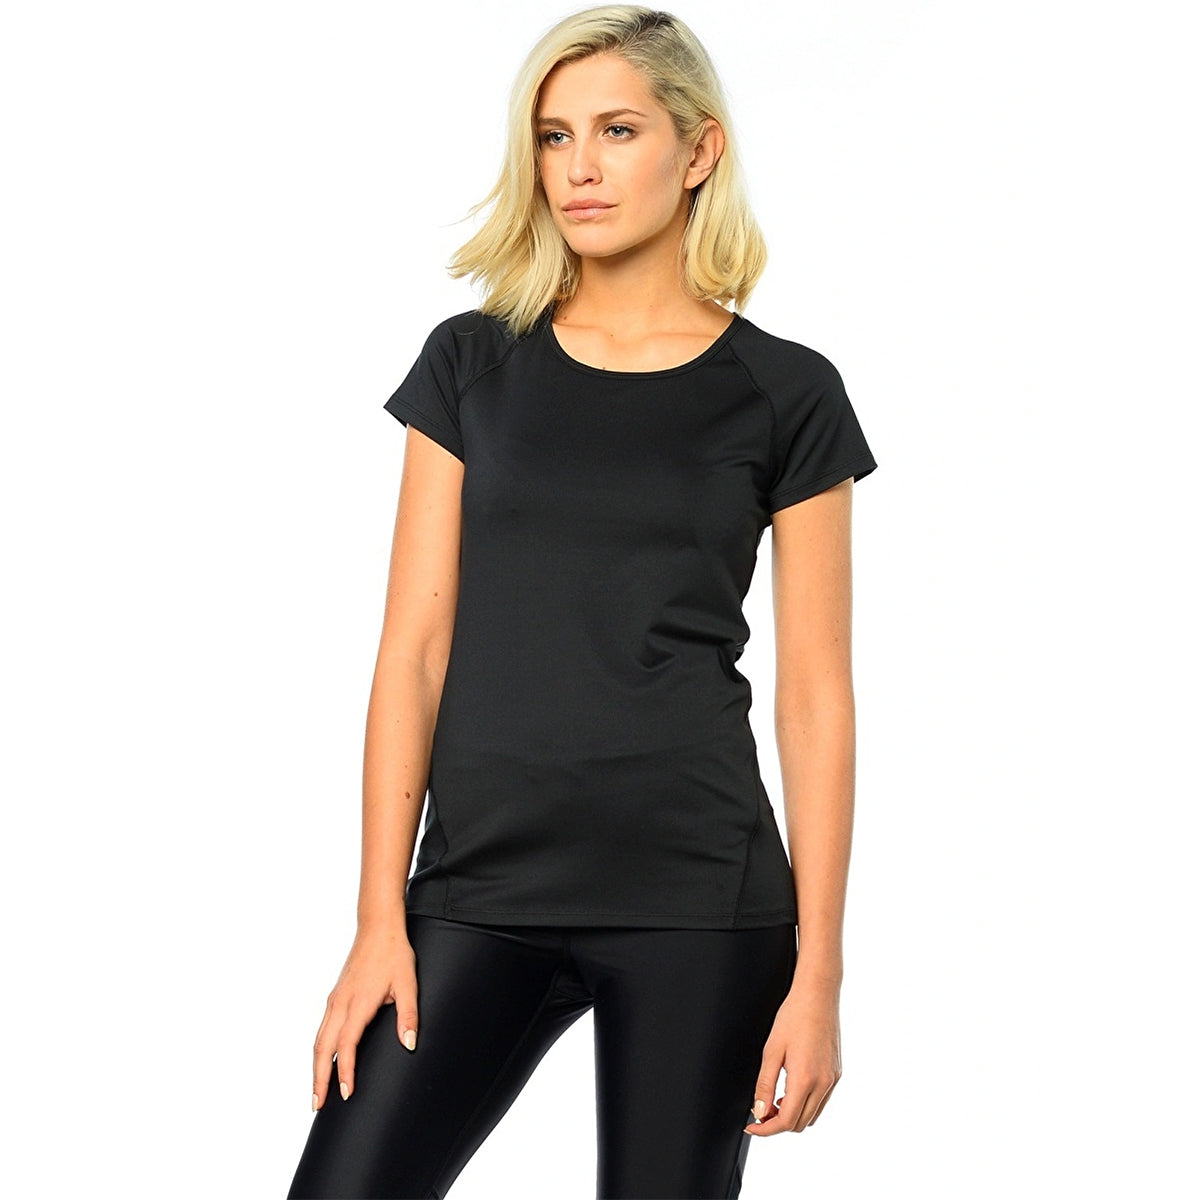 Roxy Tri Me Women's Short-Sleeve Shirts - True Black